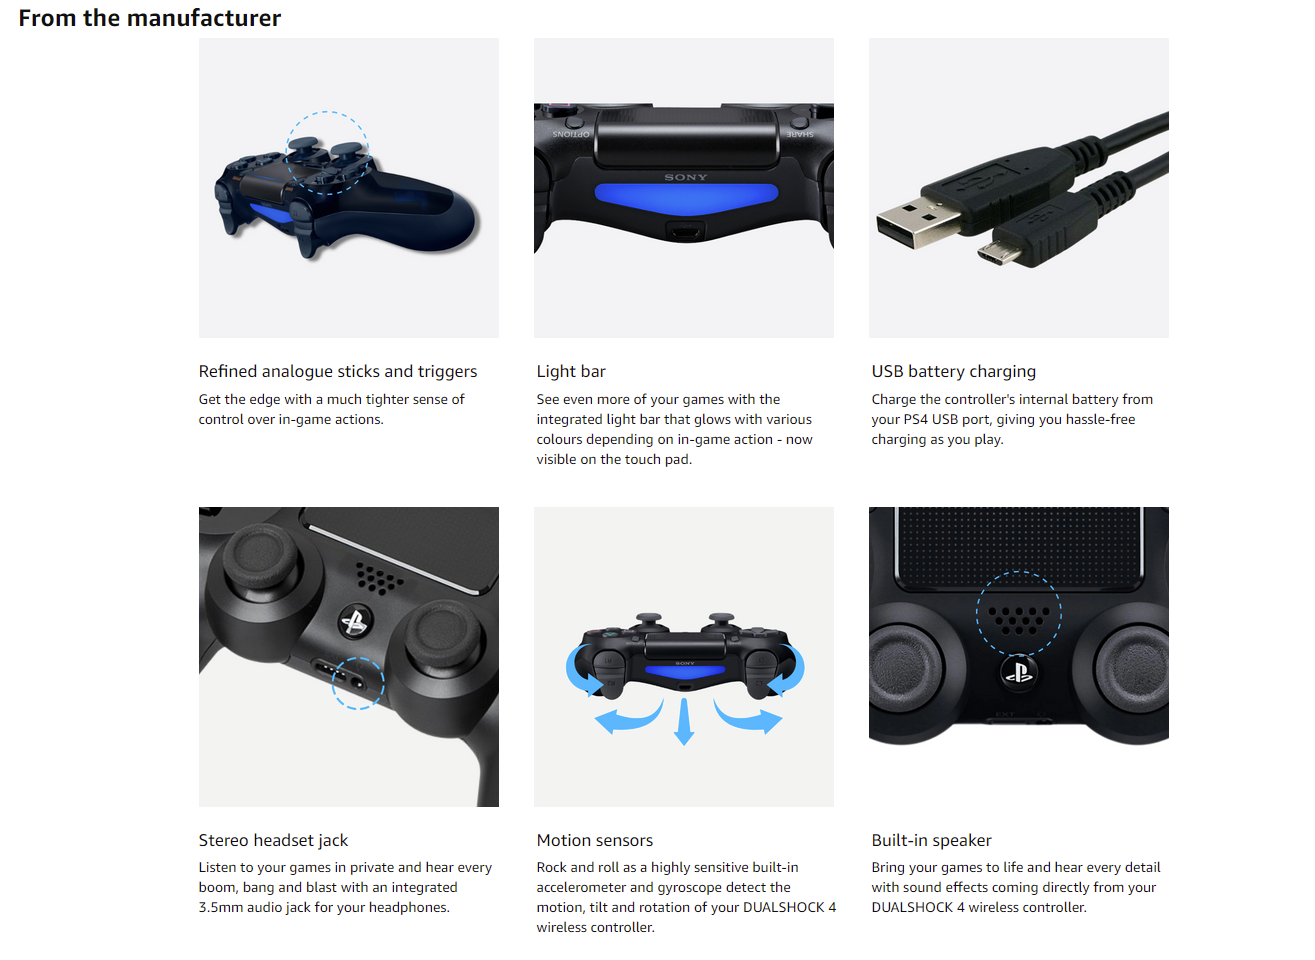 Sony DualShock 4 Wireless Controller Gamepad  (Black, For PS4) (PS4DUALSHOCKBLACKNEW)